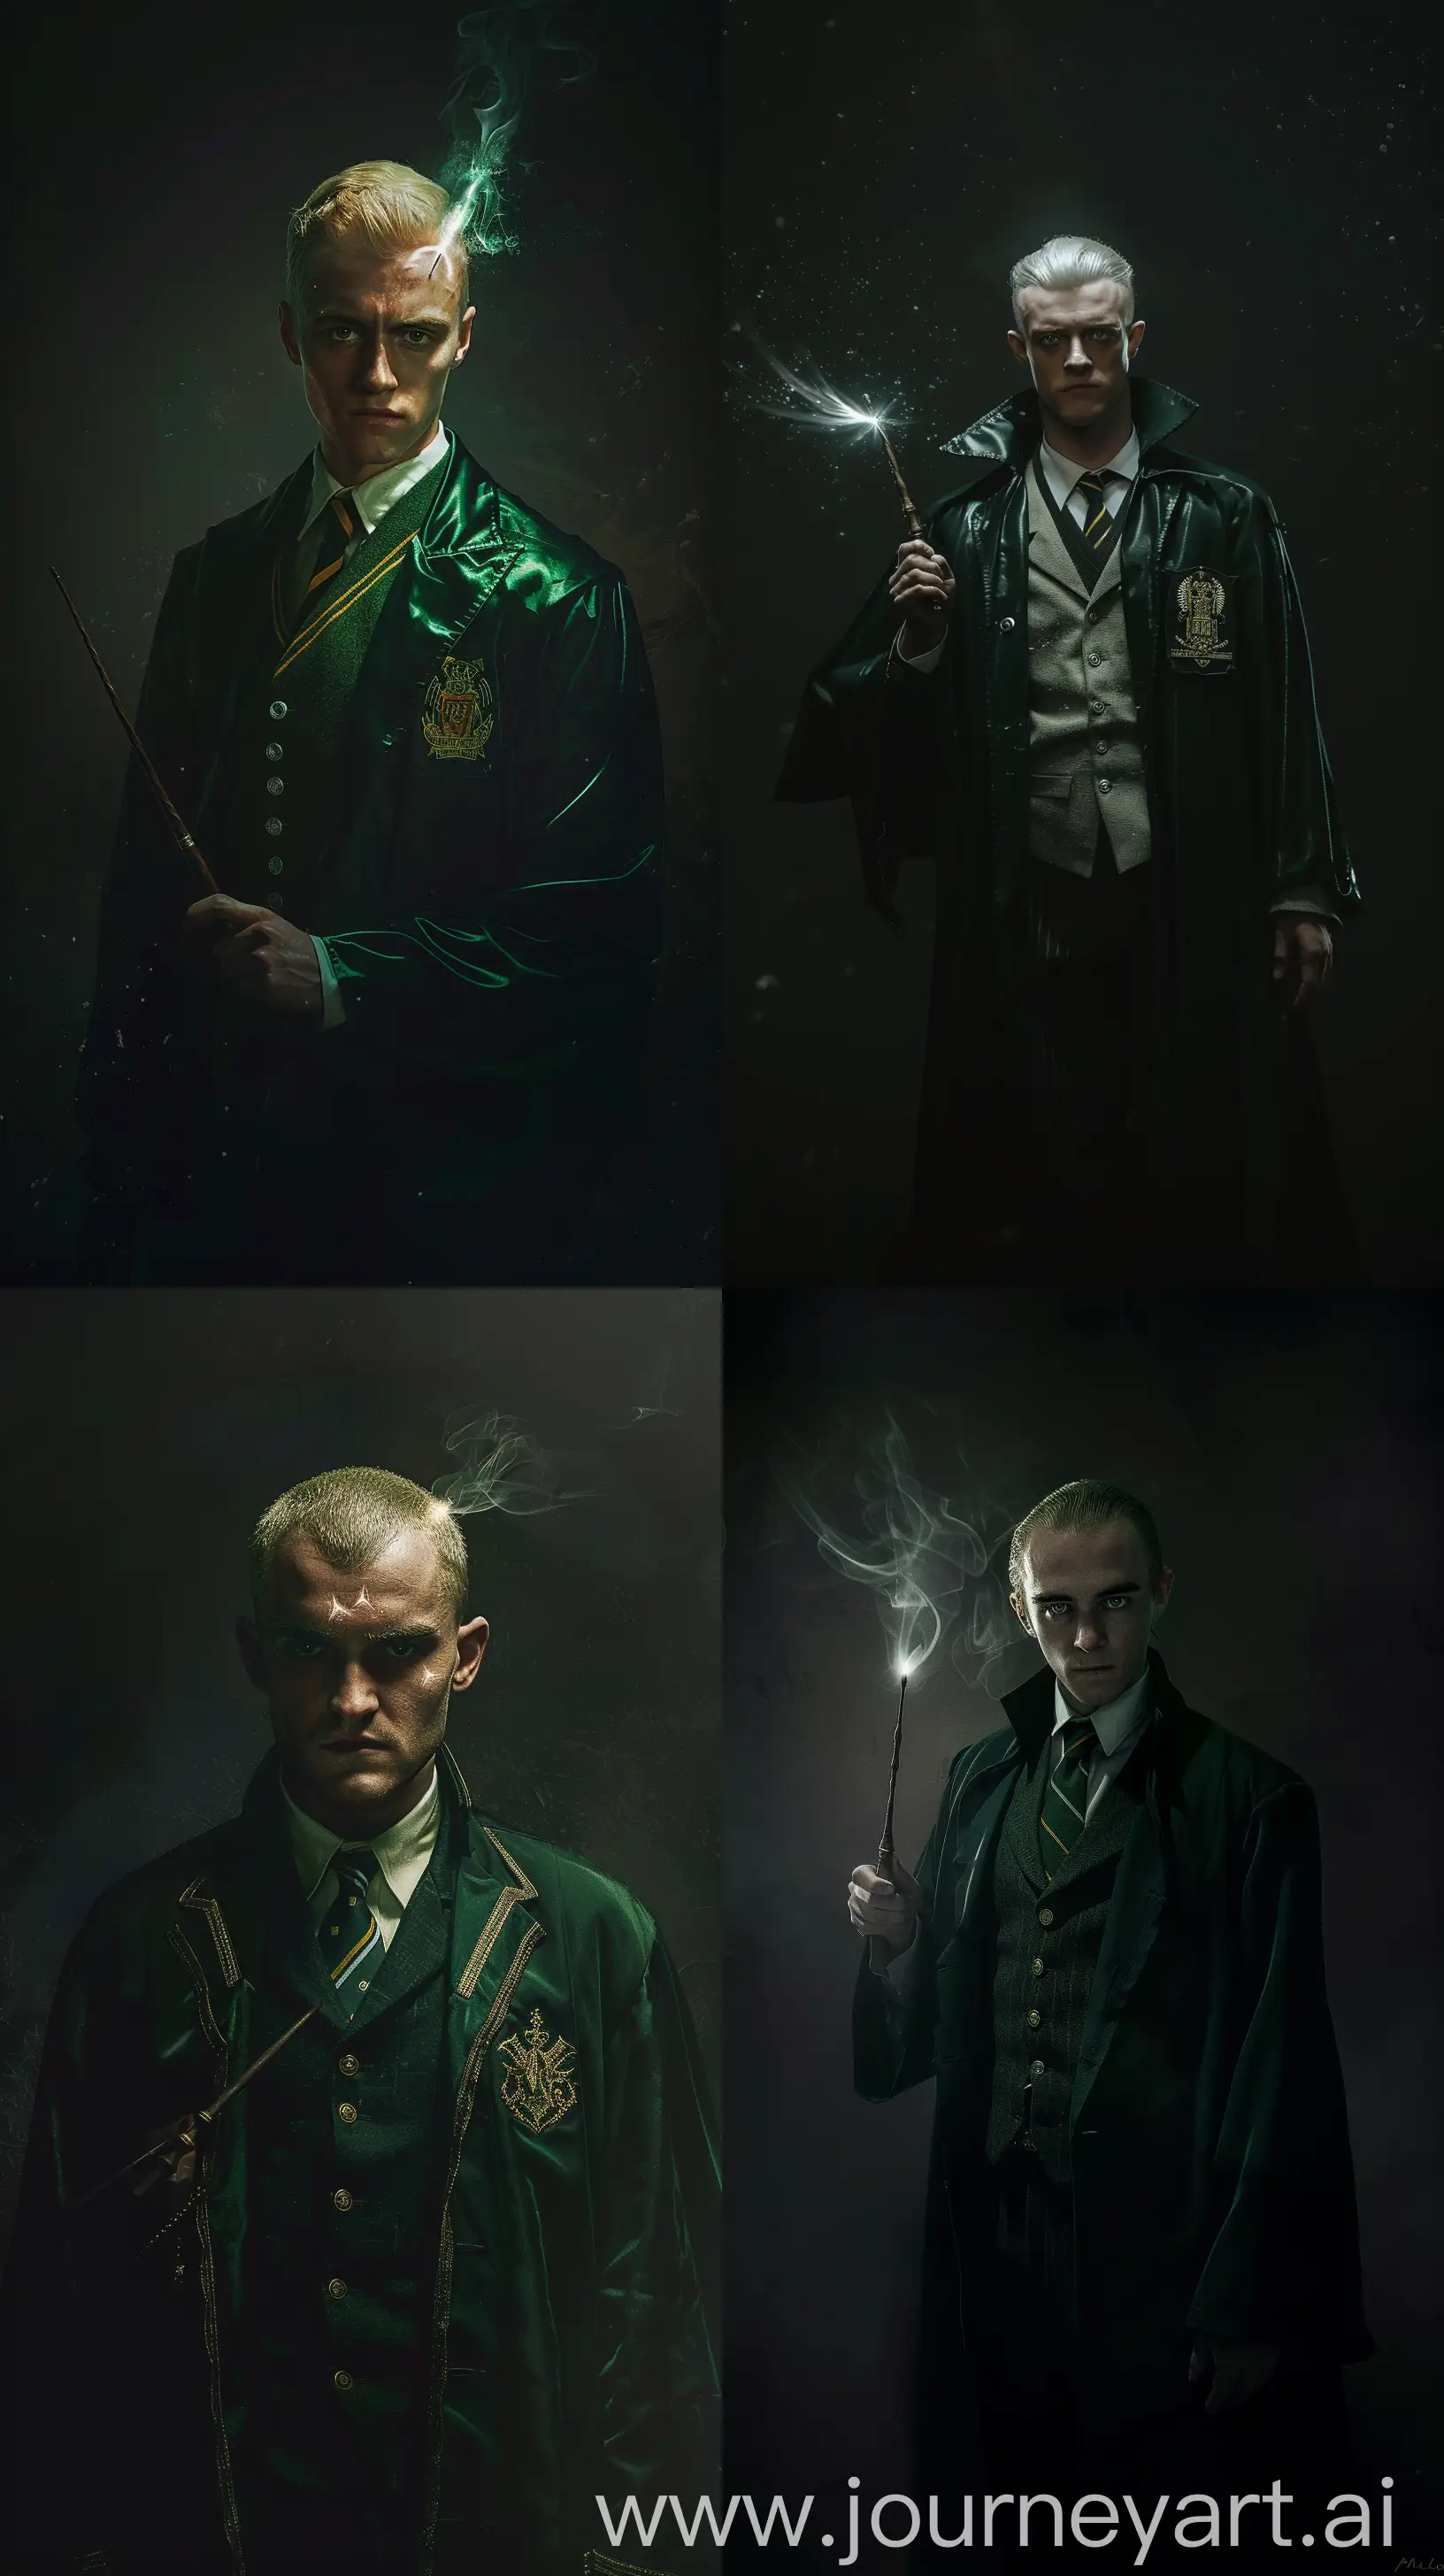 Tom-Felton-as-Draco-Malfoy-in-Slytherin-Uniform-Casting-Spell-in-Darkness